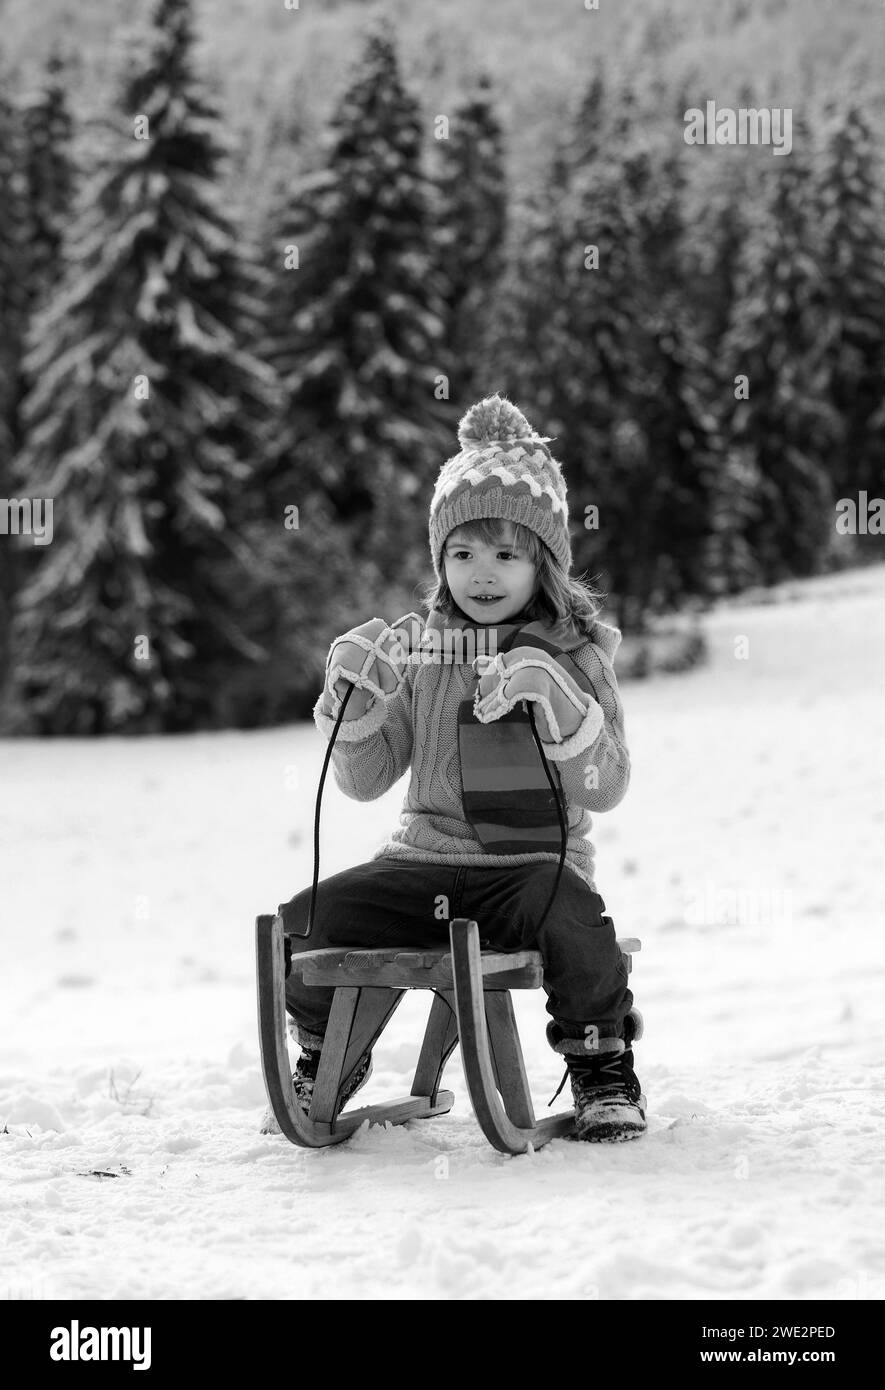 Child boy sledding in winter. Kid riding on snow slides in winter. Wonderful Christmas scene. Stock Photo